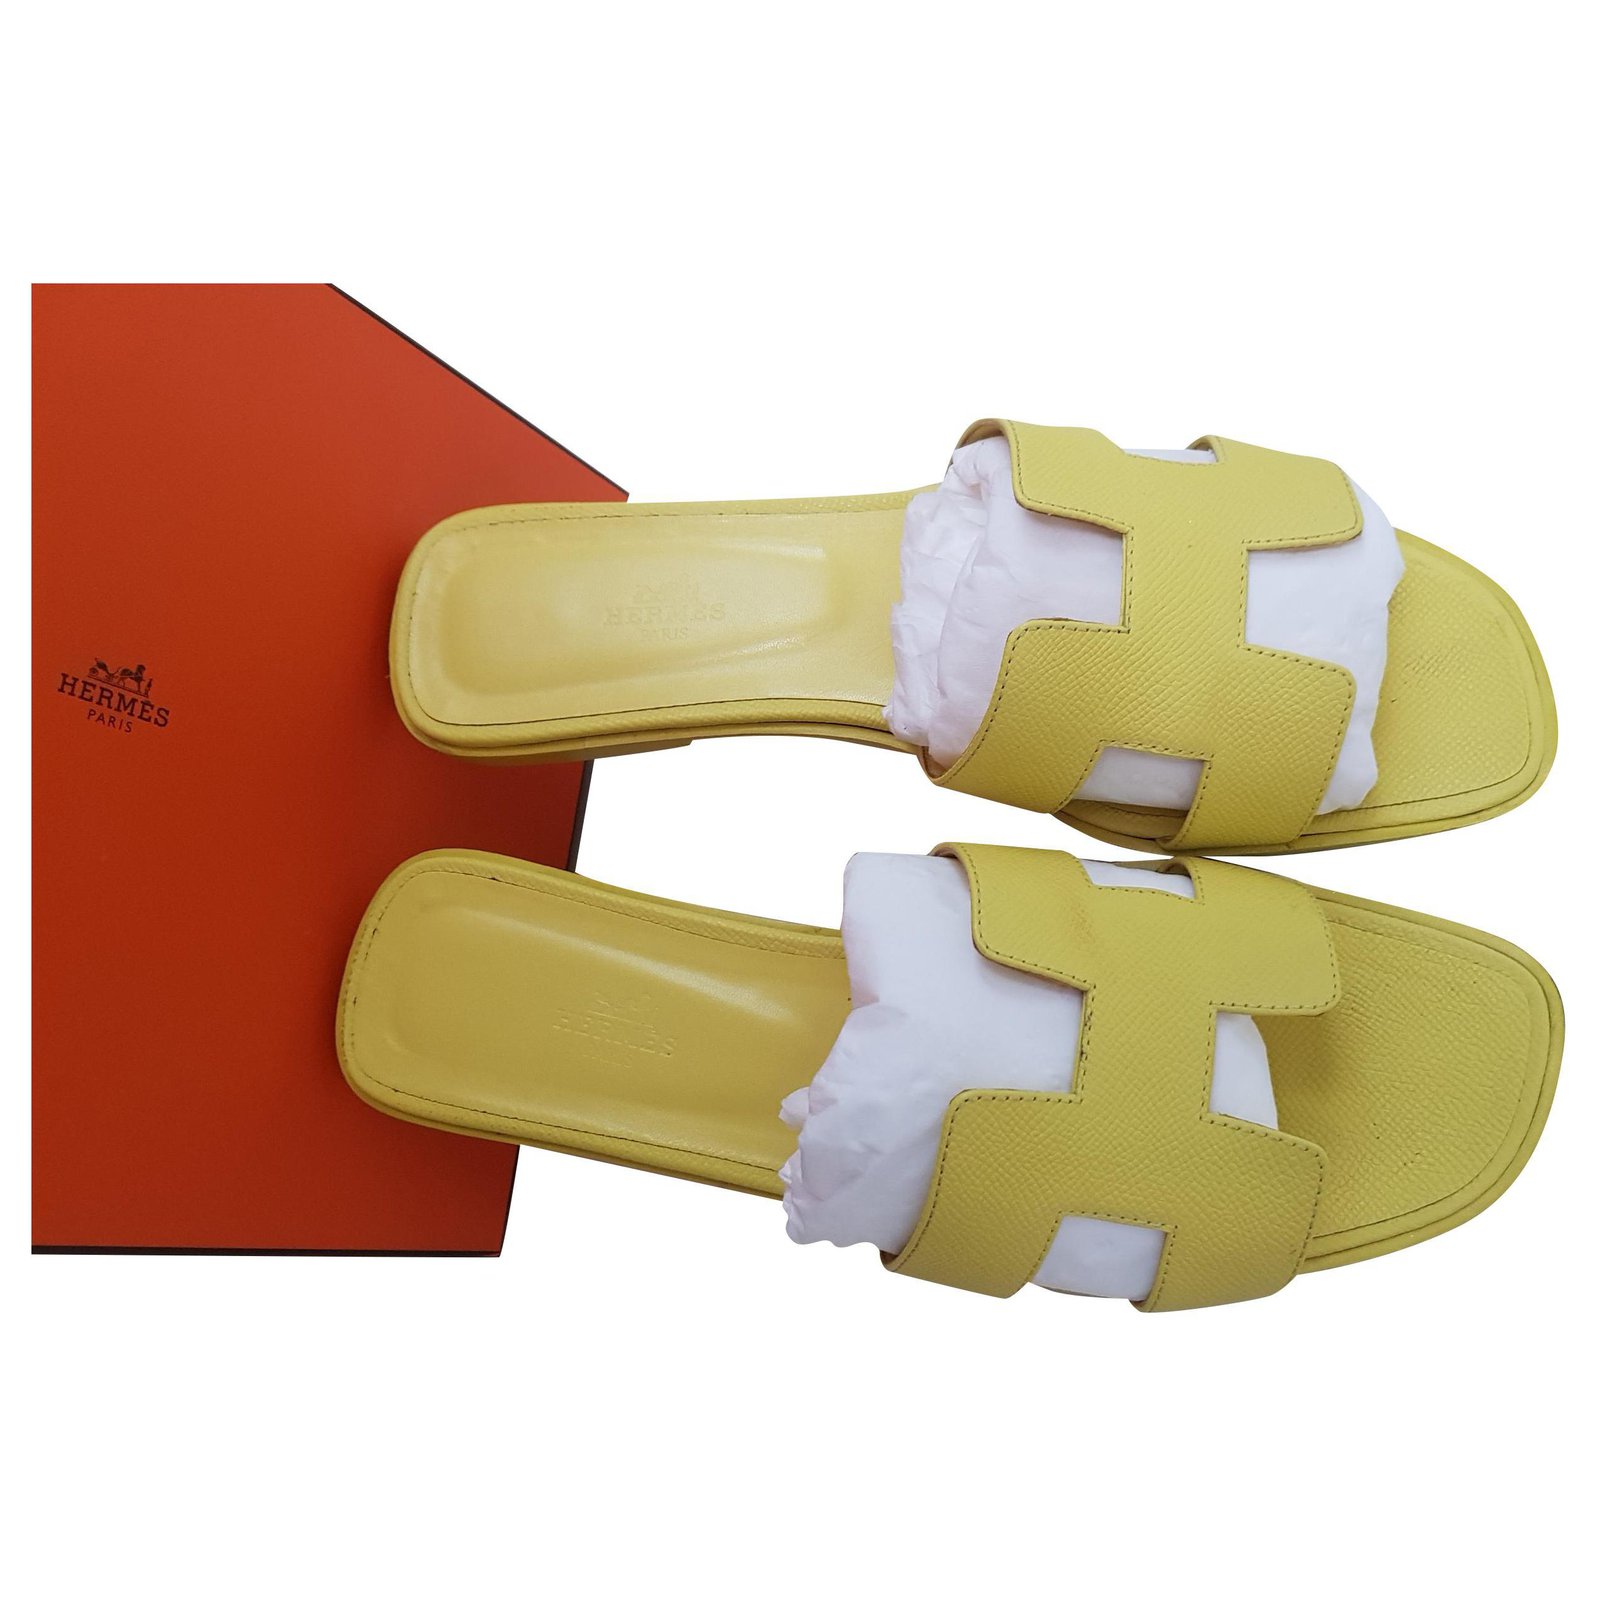 hermes sandals yellow